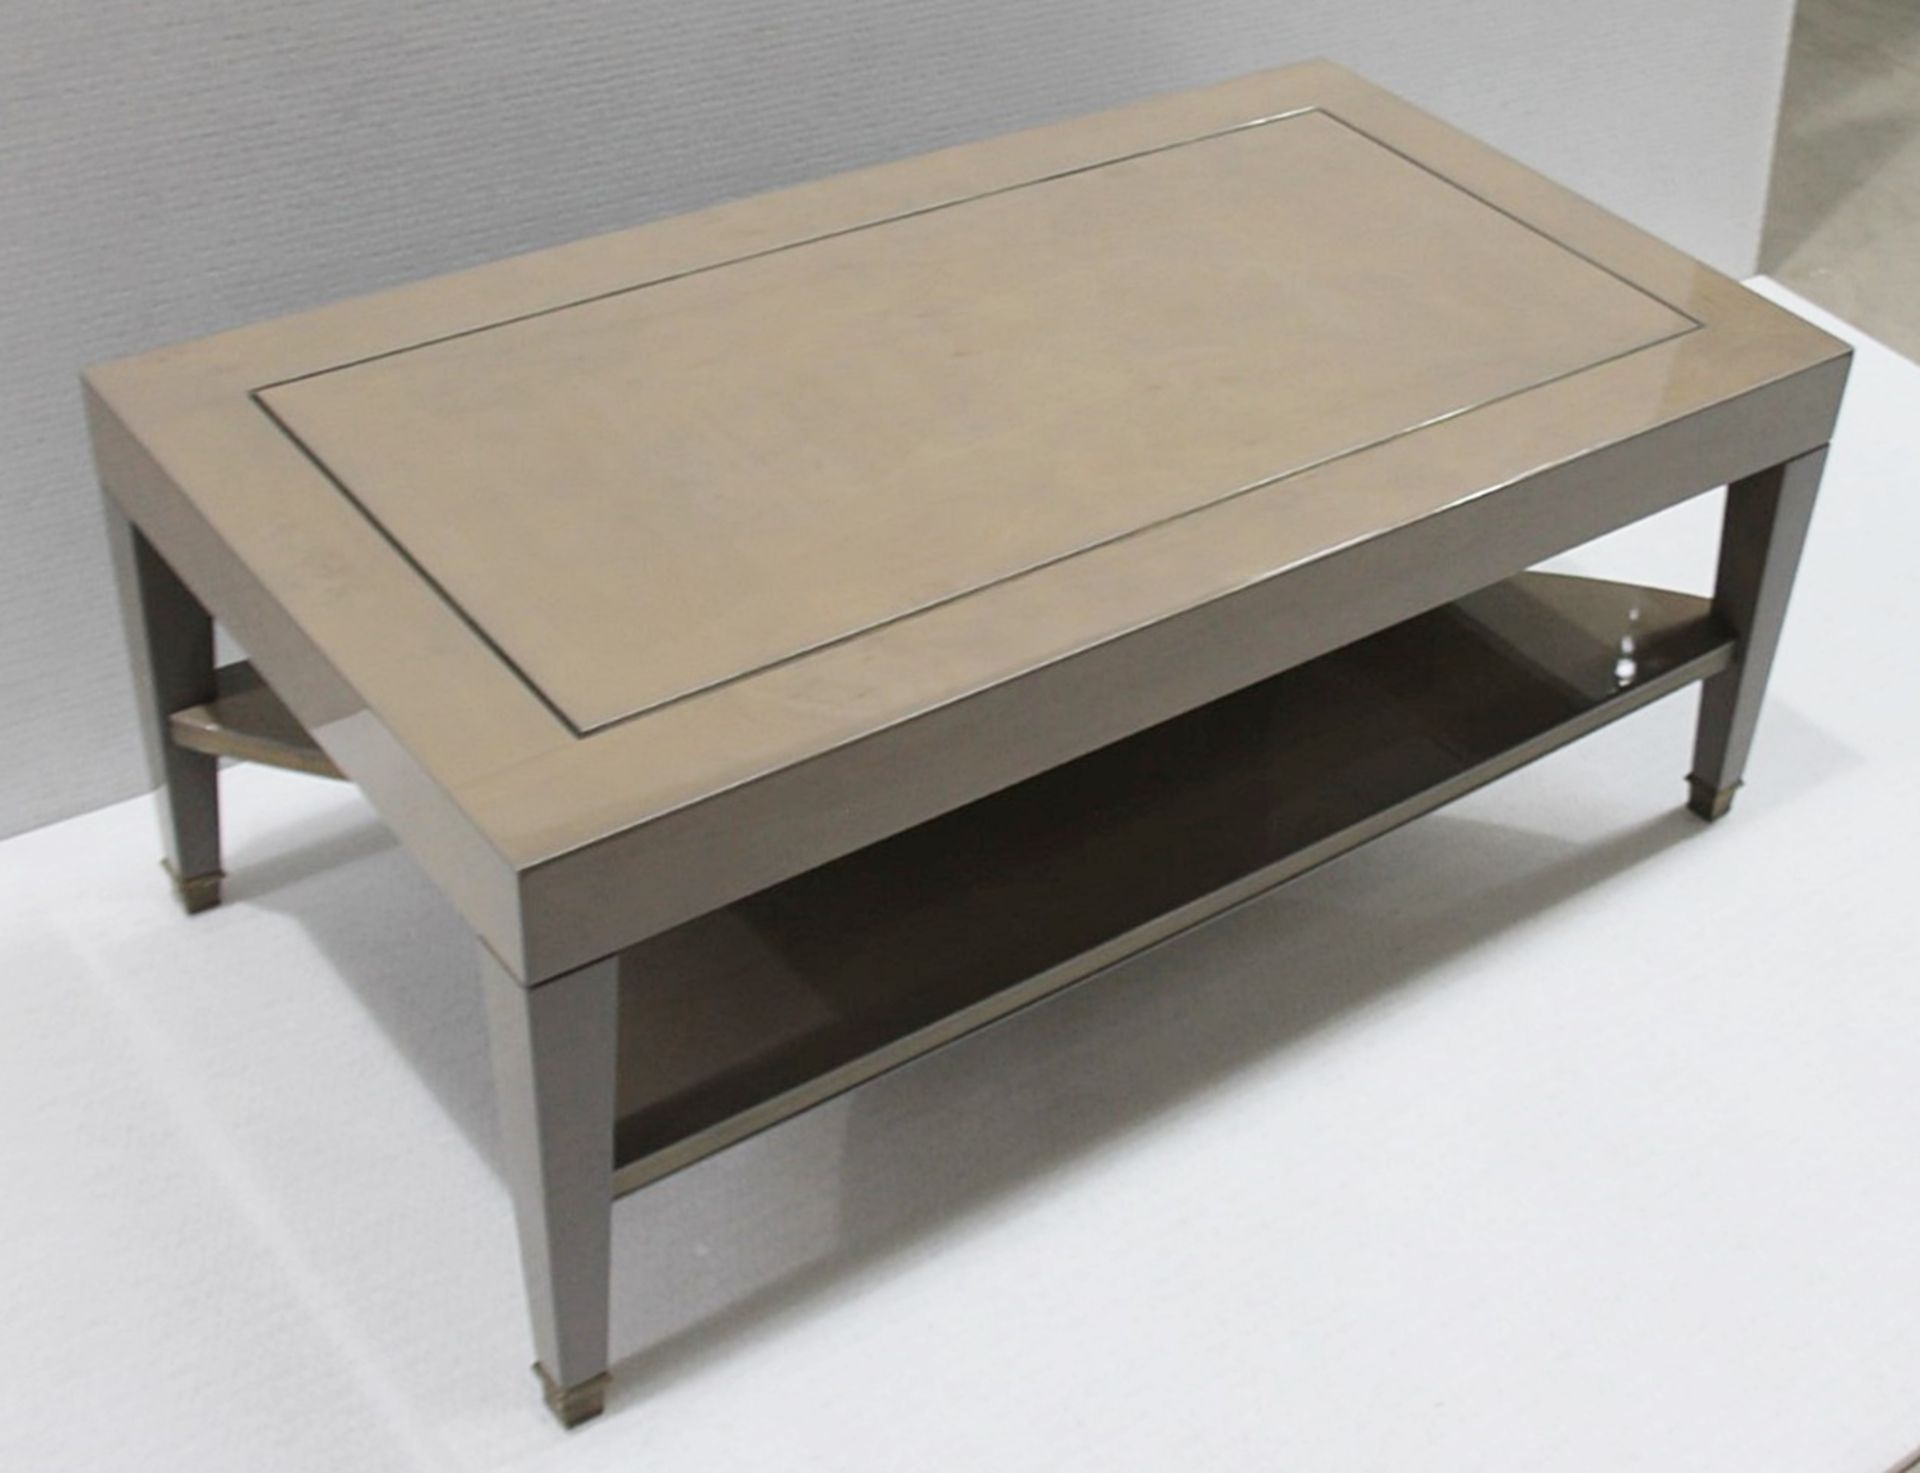 1 x JUSTIN VAN BREDA 'Legacy Alexander' Designer Lacquered Coffee Table With Undershelf - RRP £5,000 - Image 5 of 9